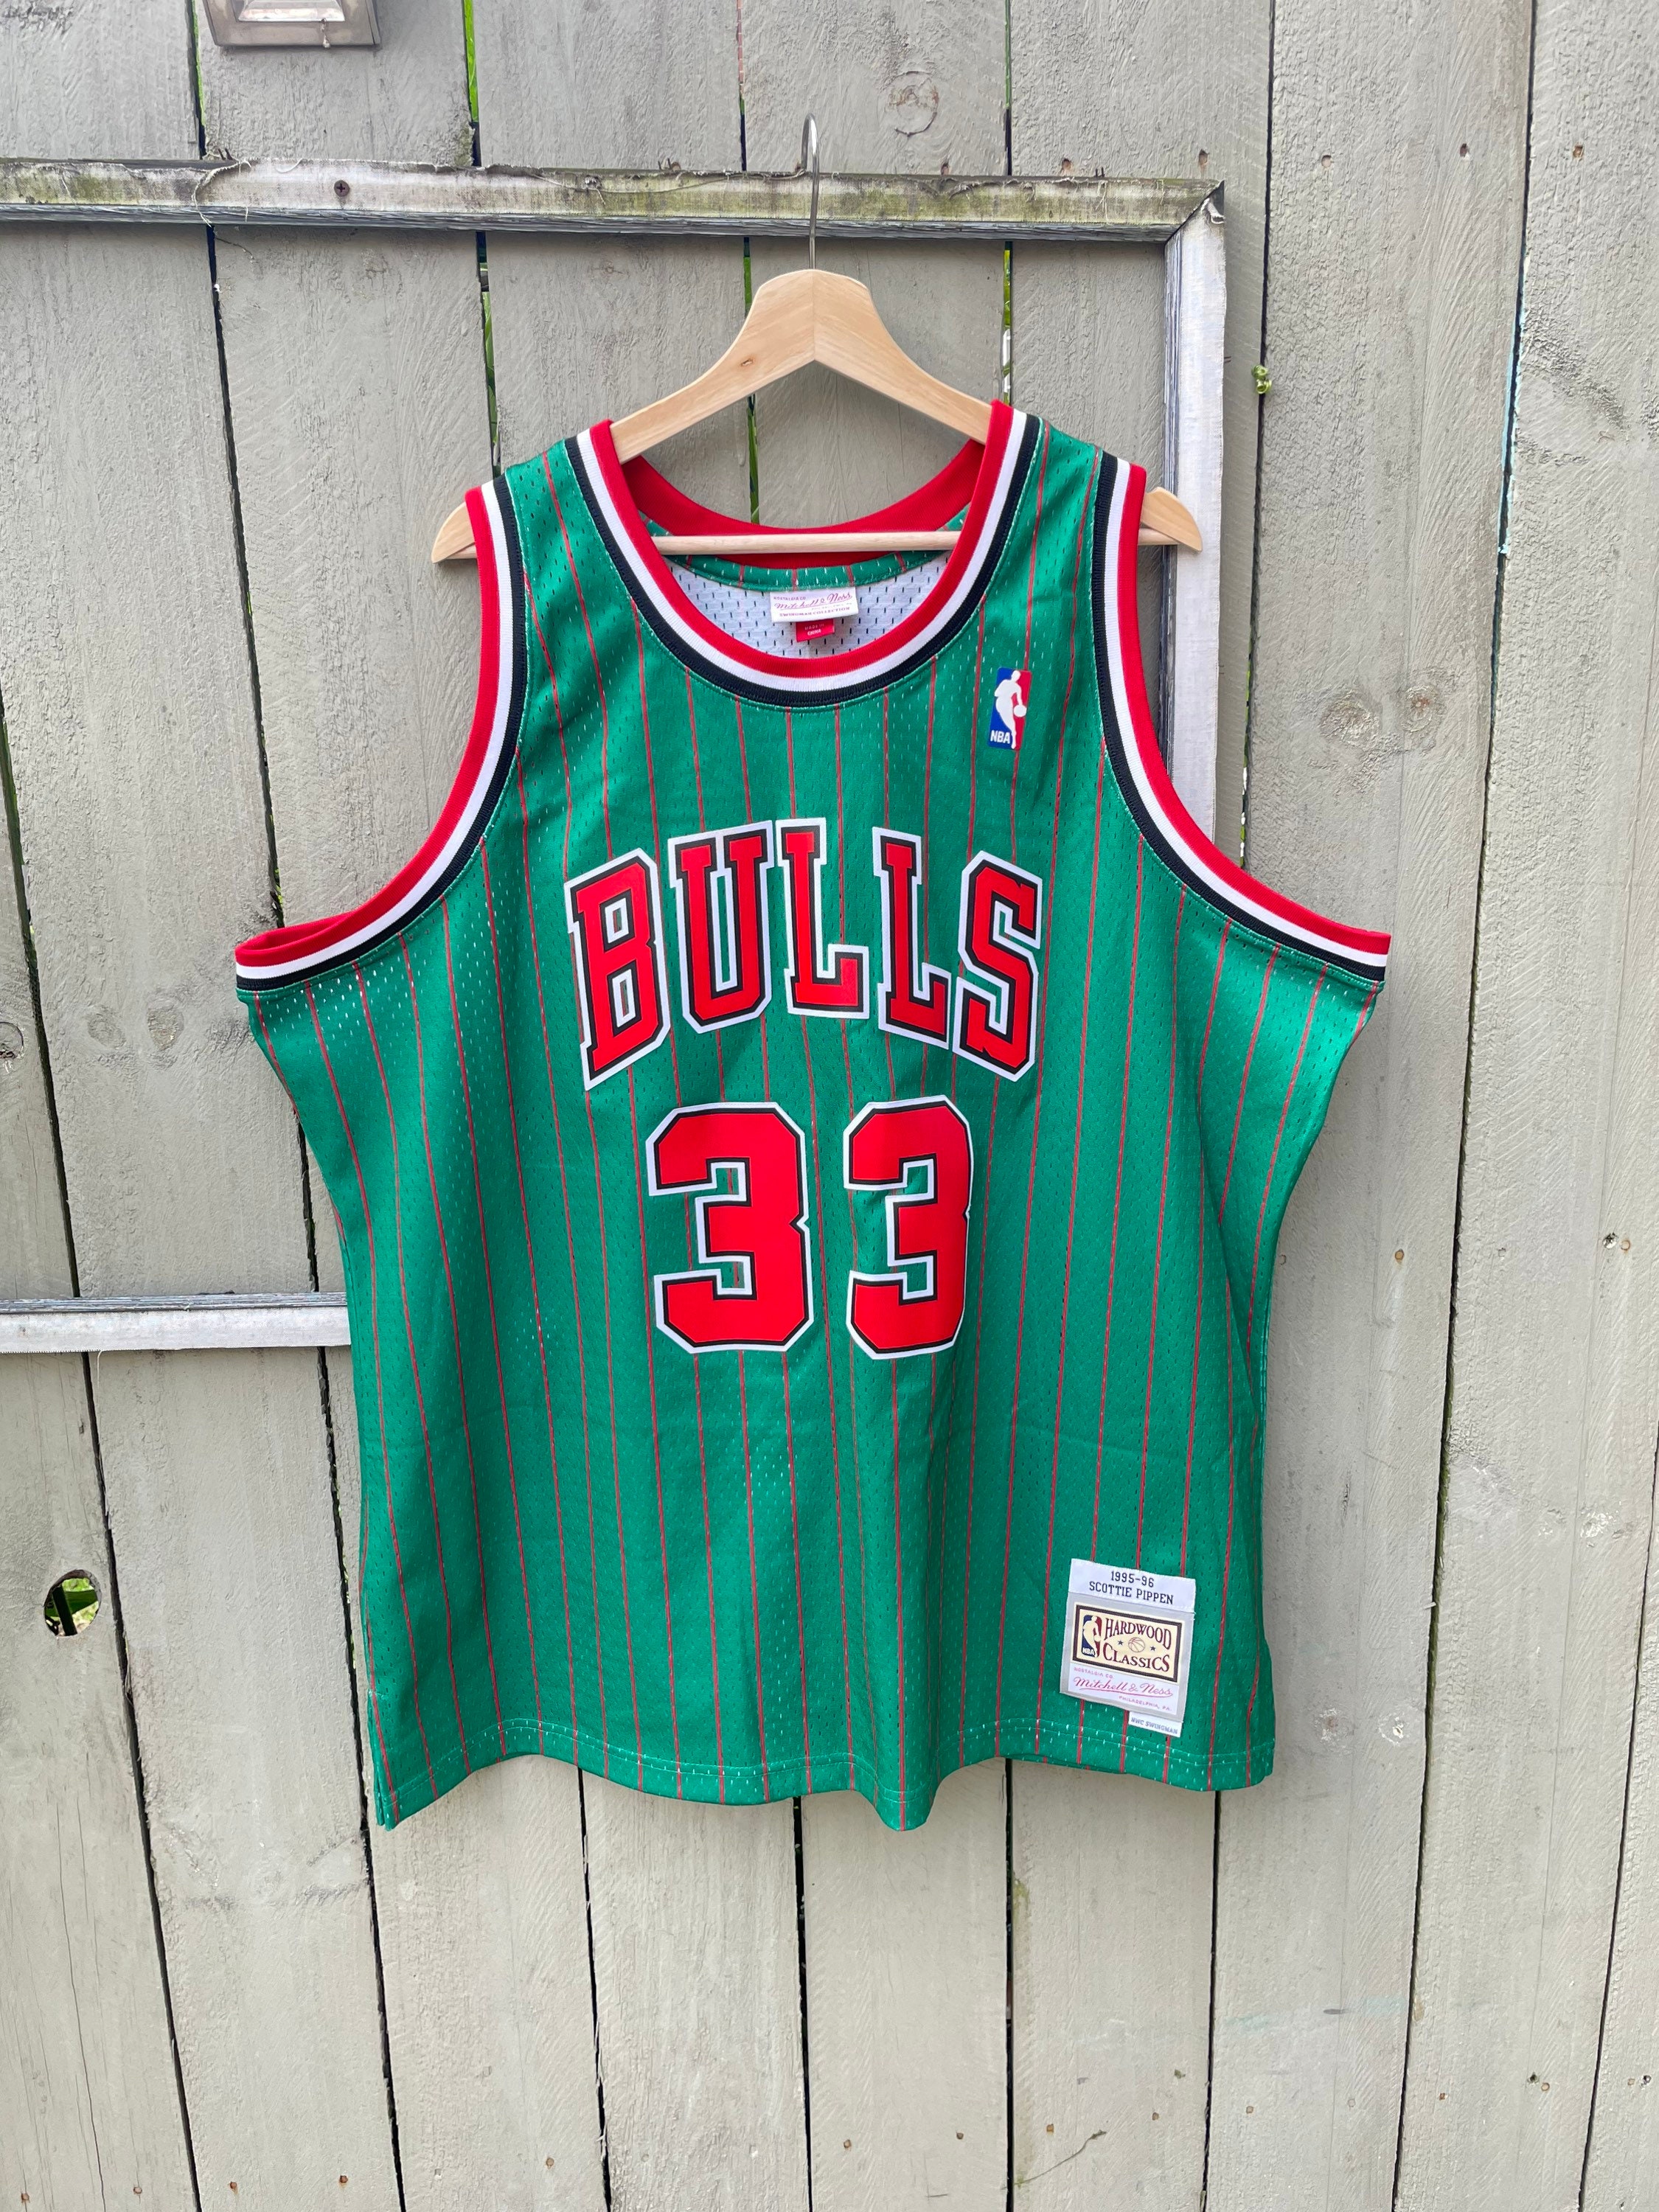 Scottie Pippen 33 Chicago Bulls 1995-96 Mitchell & Ness